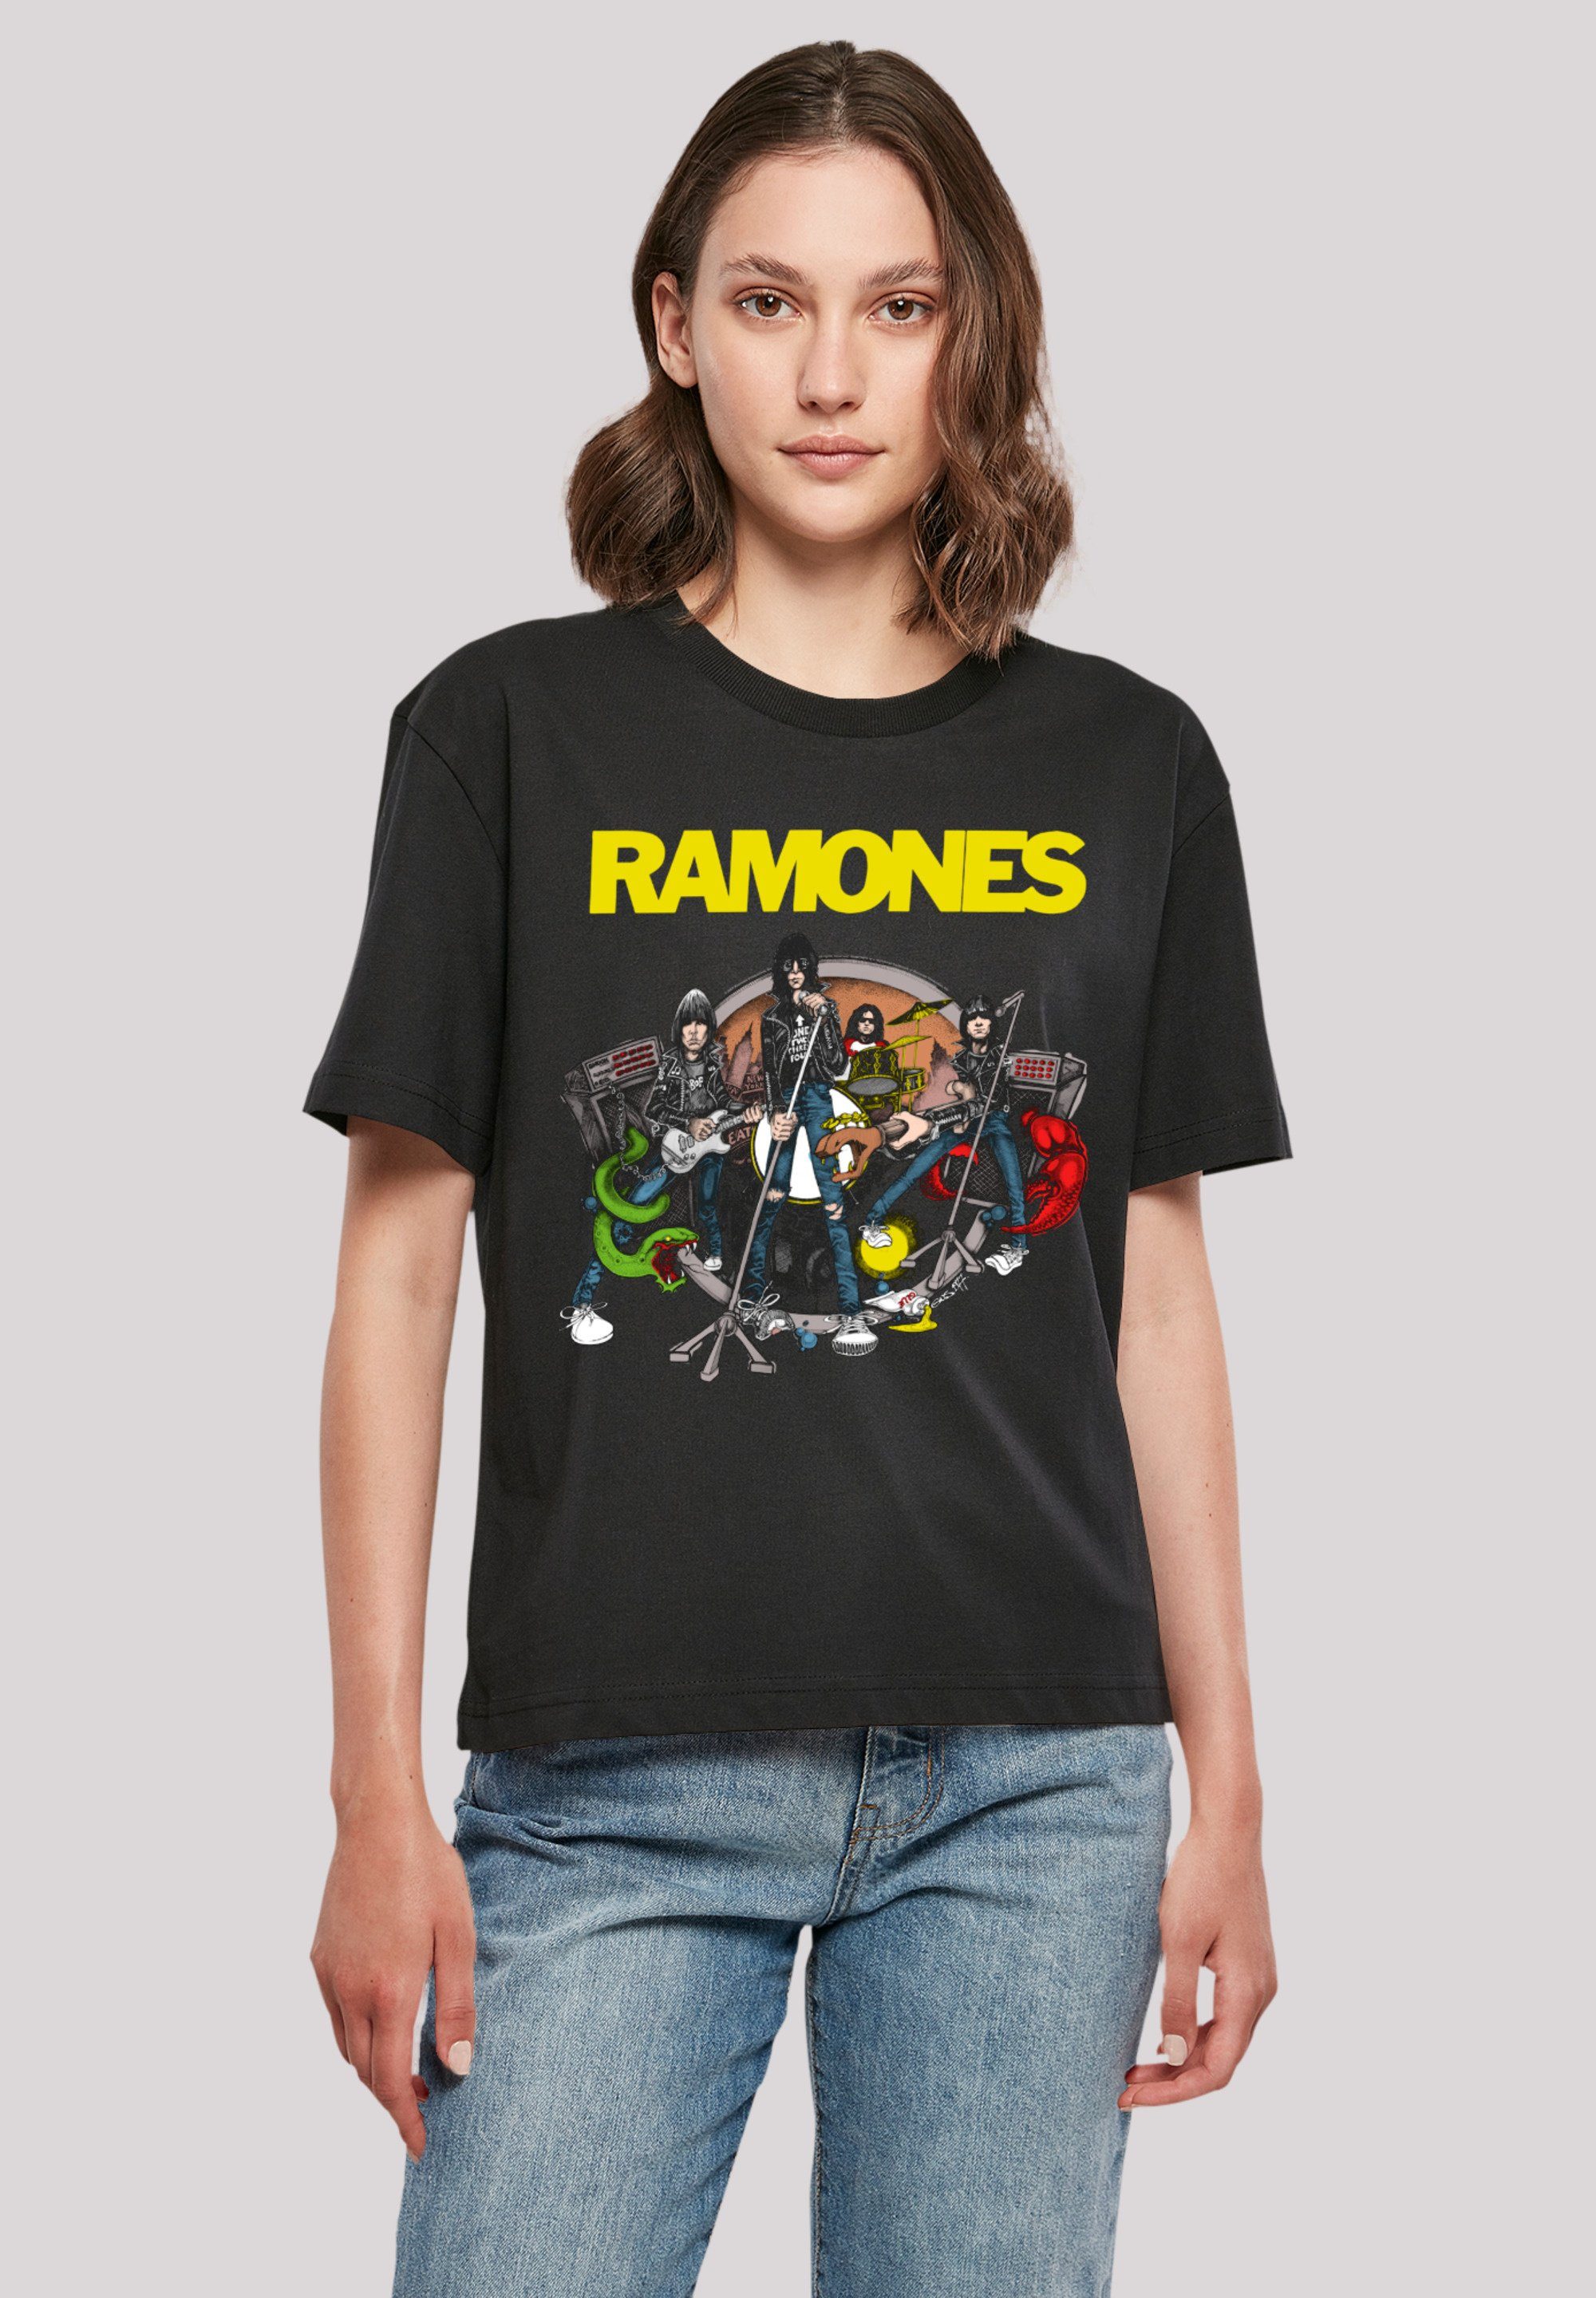 F4NT4STIC T-Shirt Band Rock-Musik Qualität, Ramones Ruin Road To Musik Rock Premium Band